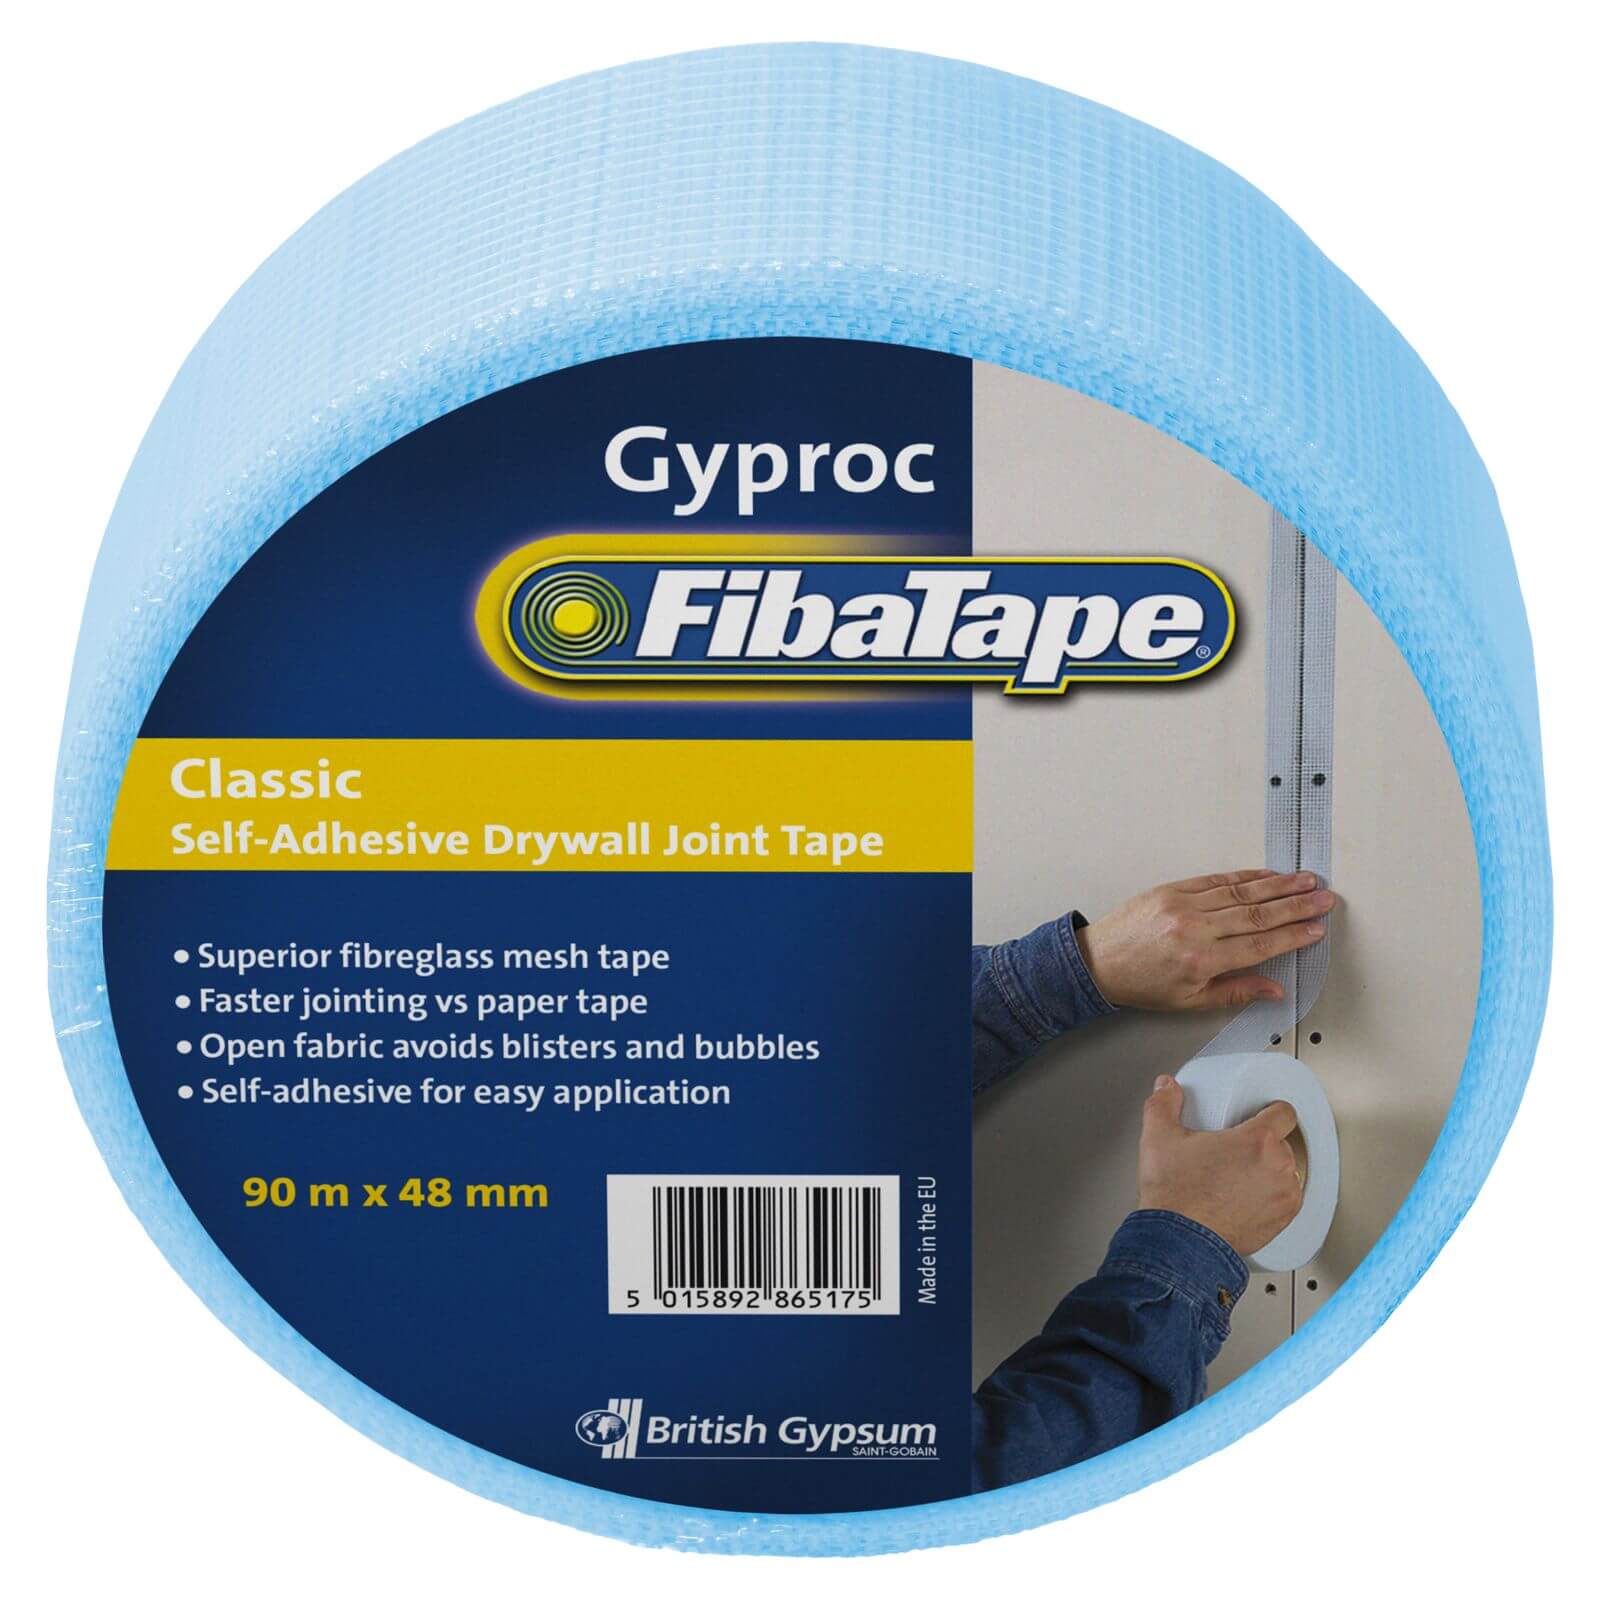 Photo of Gyproc Fibatape Classic Drywall Tape - 90m X 48mm